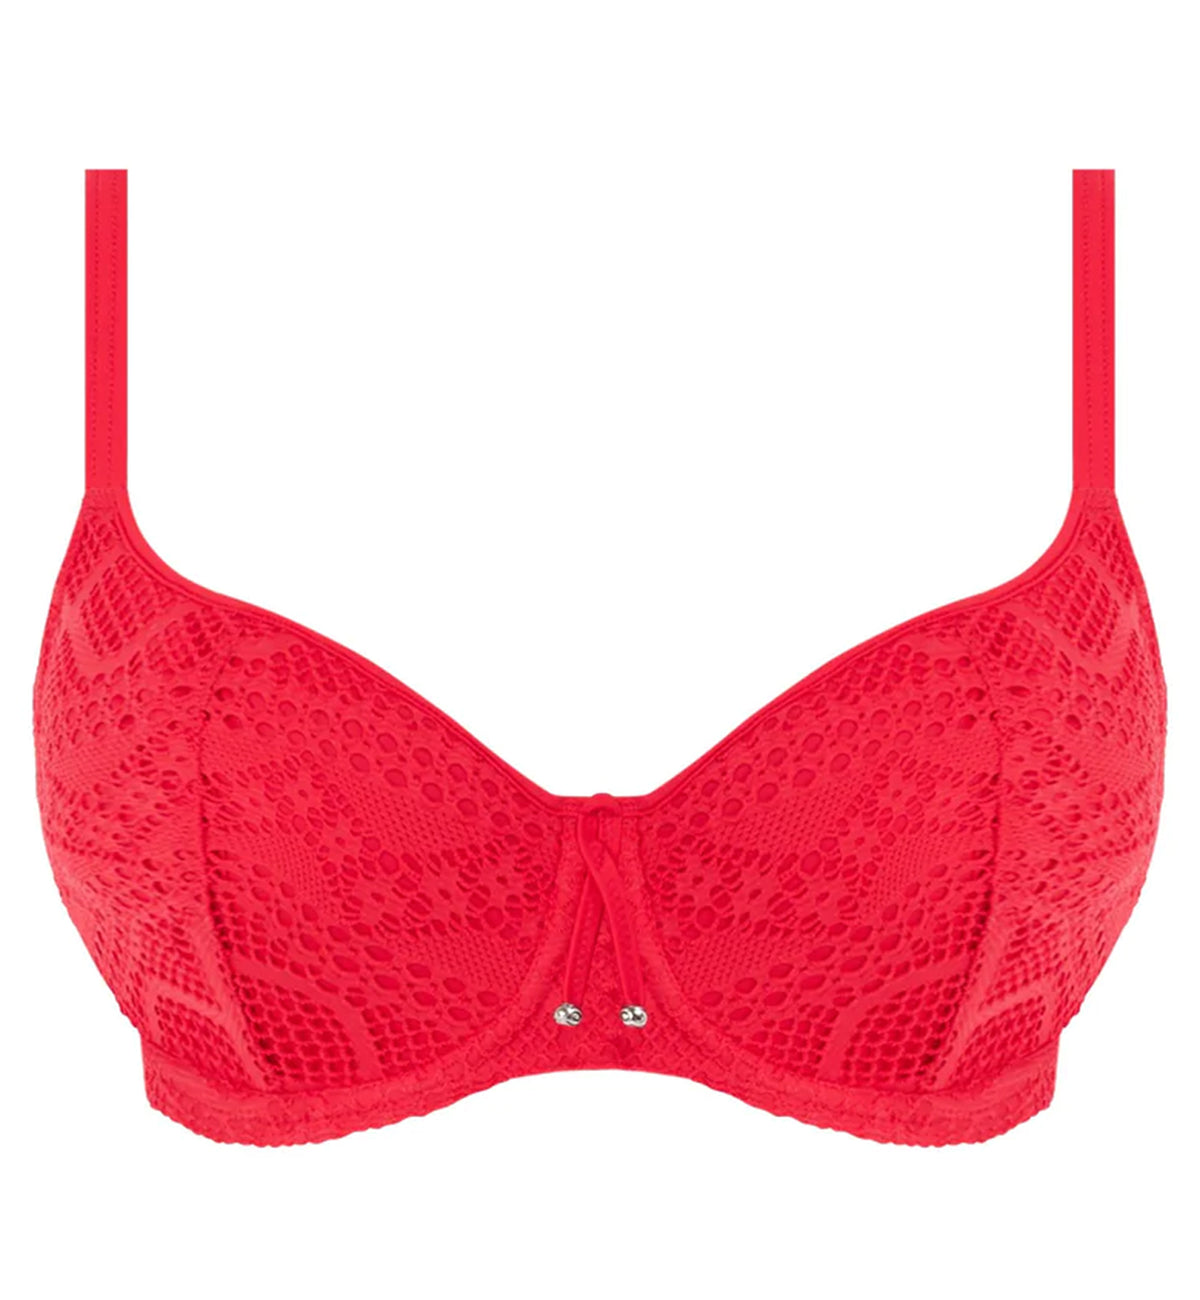 Freya Sundance Crochet Sweetheart Padded Underwire Bikini Top (3970),30E,Red - Red,30E